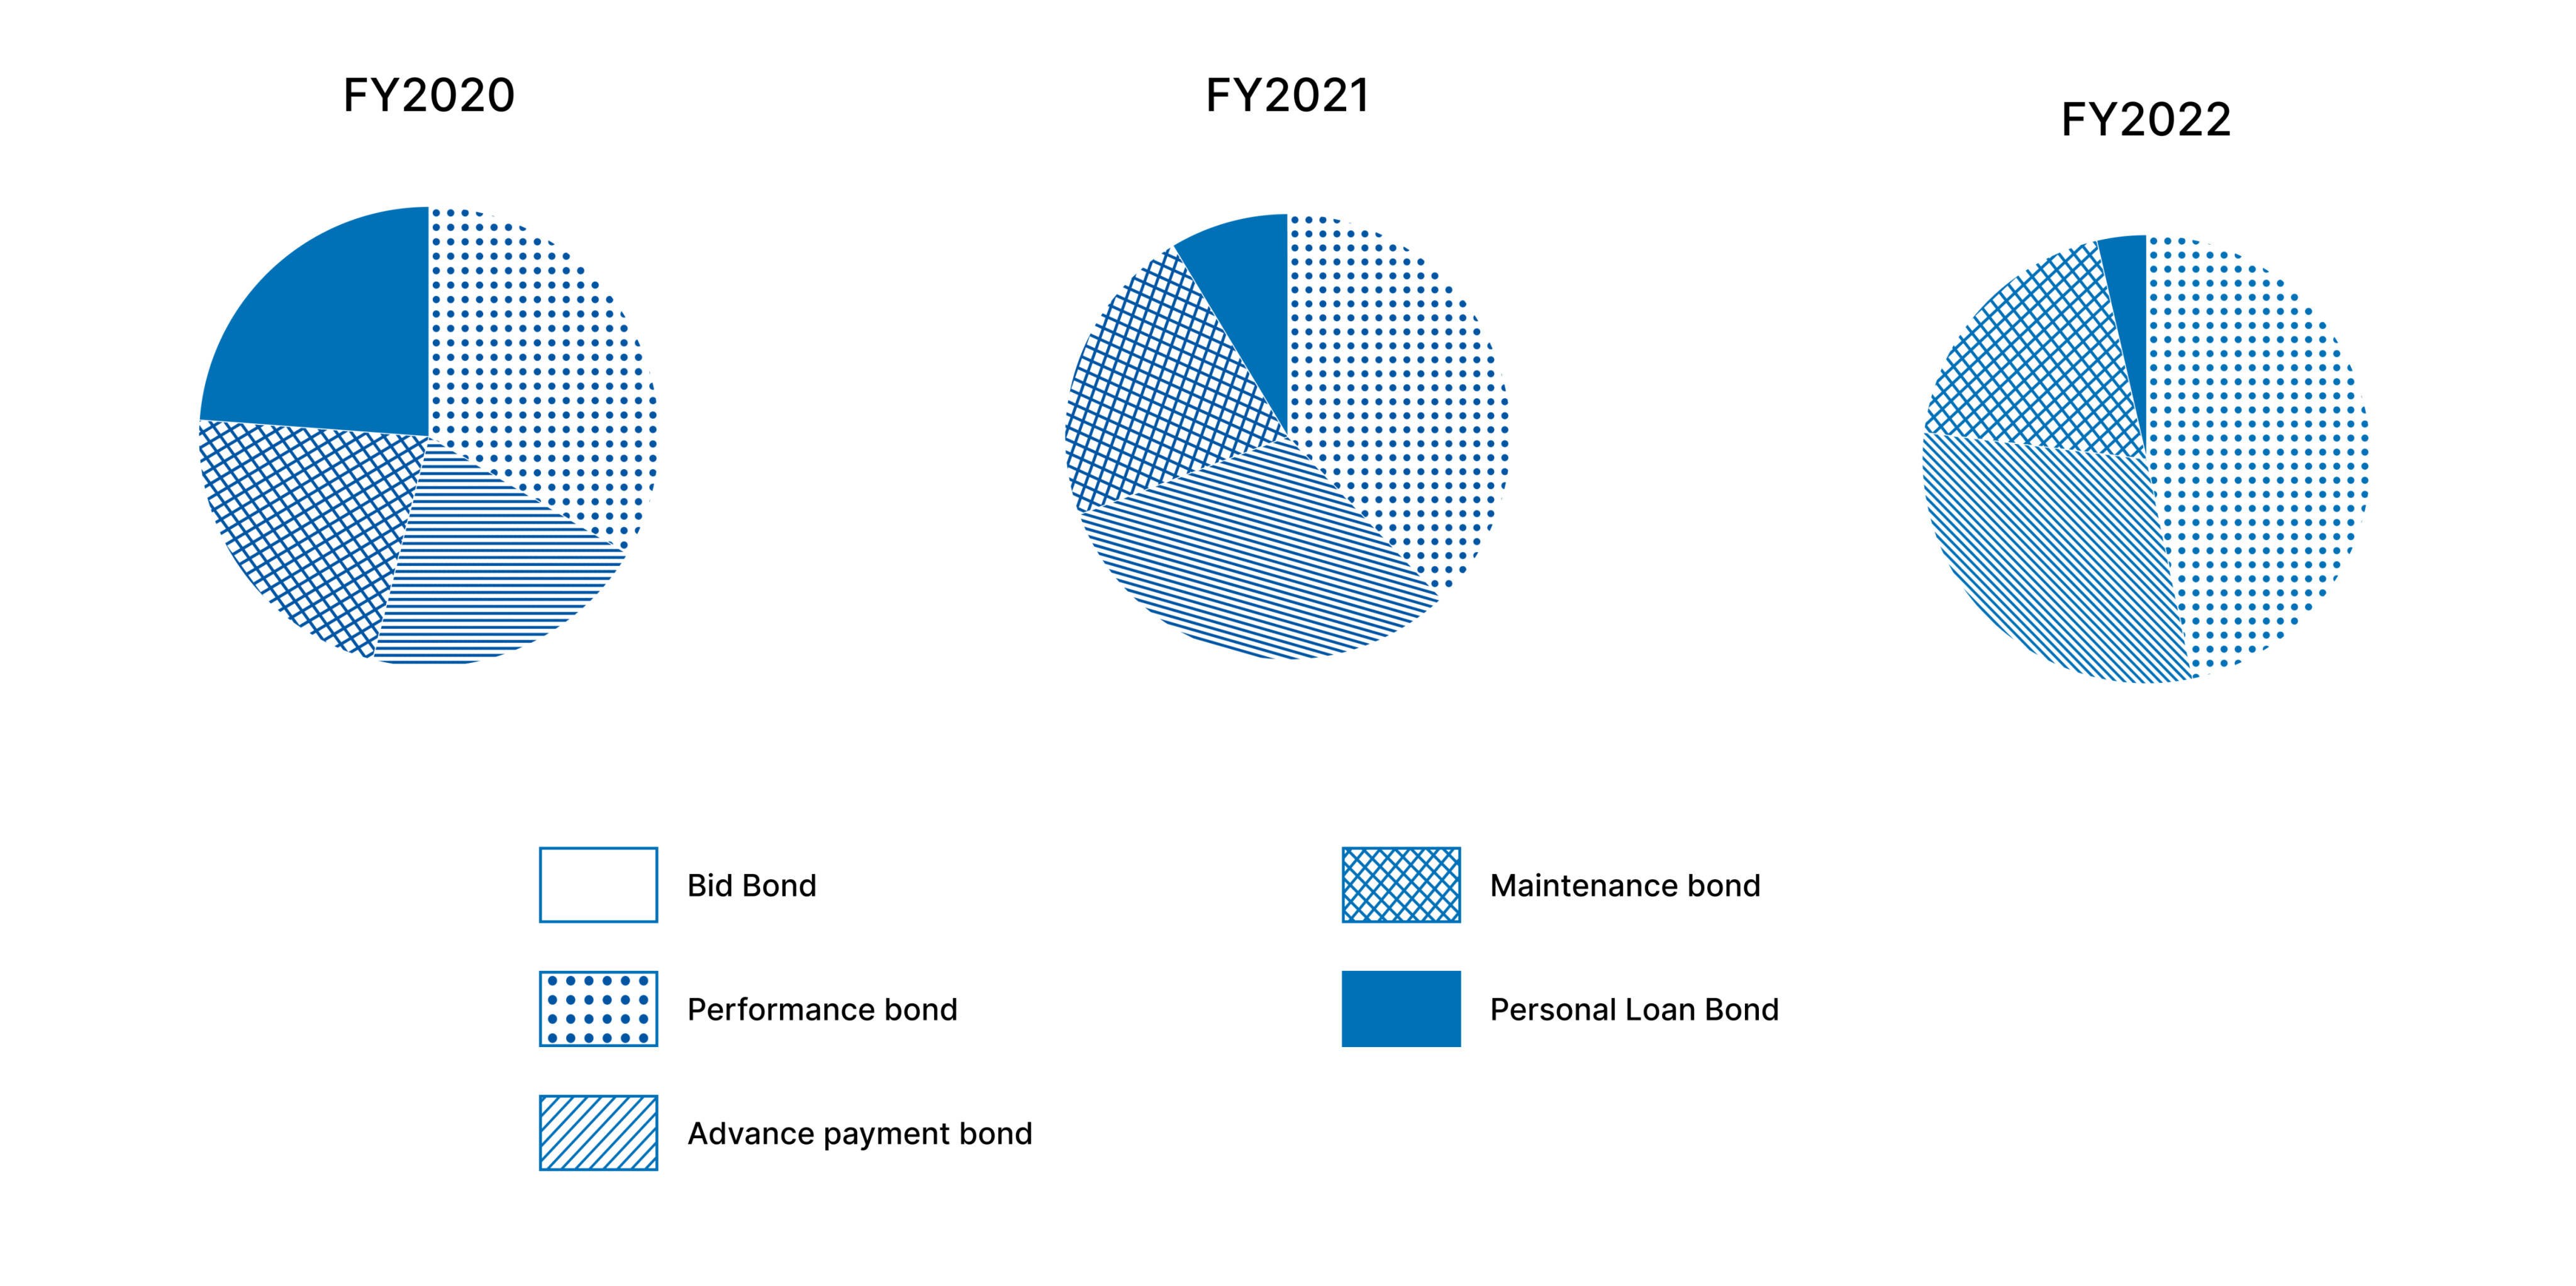 FY2021, bid bond : 0.02%, performance bond : 37.91%, advance payment bond : 31.45%, maintenance bond : 22.06%, personal loan bond : 8.56%, FY2022, bid bond : 0.03%, performance bond : 46.70%, advance payment bond : 30.3%, maintenance bond : 19.45%, personal loan bond : 3.51%,FY2023, bid bond : 0.07%, performance bond : 34.01%, advance payment bond : 13.79%, maintenance bond : 32.01%, personal loan bond : 20.13%